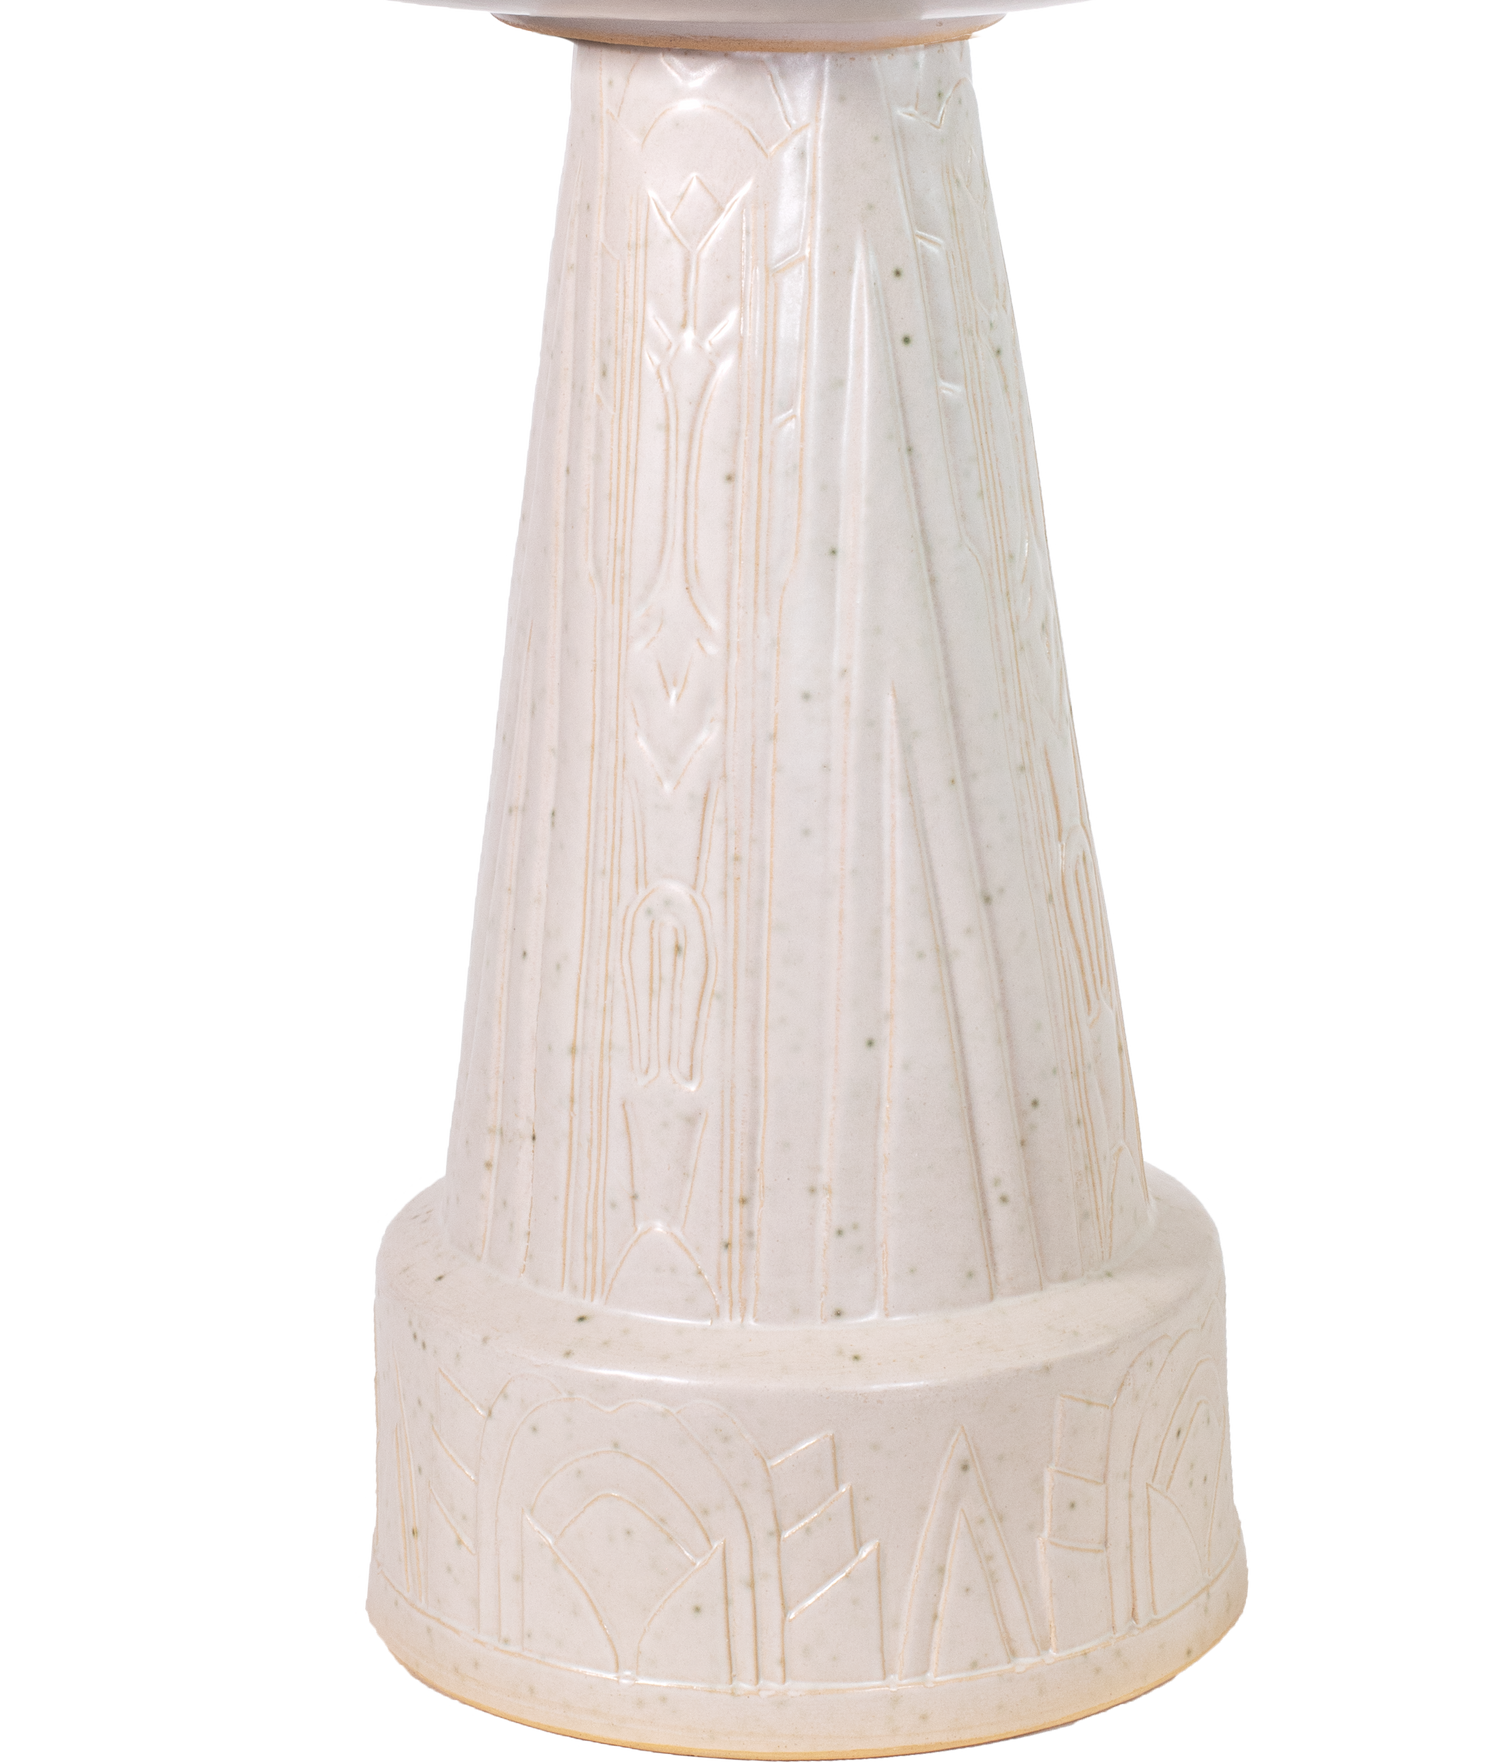 ceramic white birdbath pedestal with deco style design